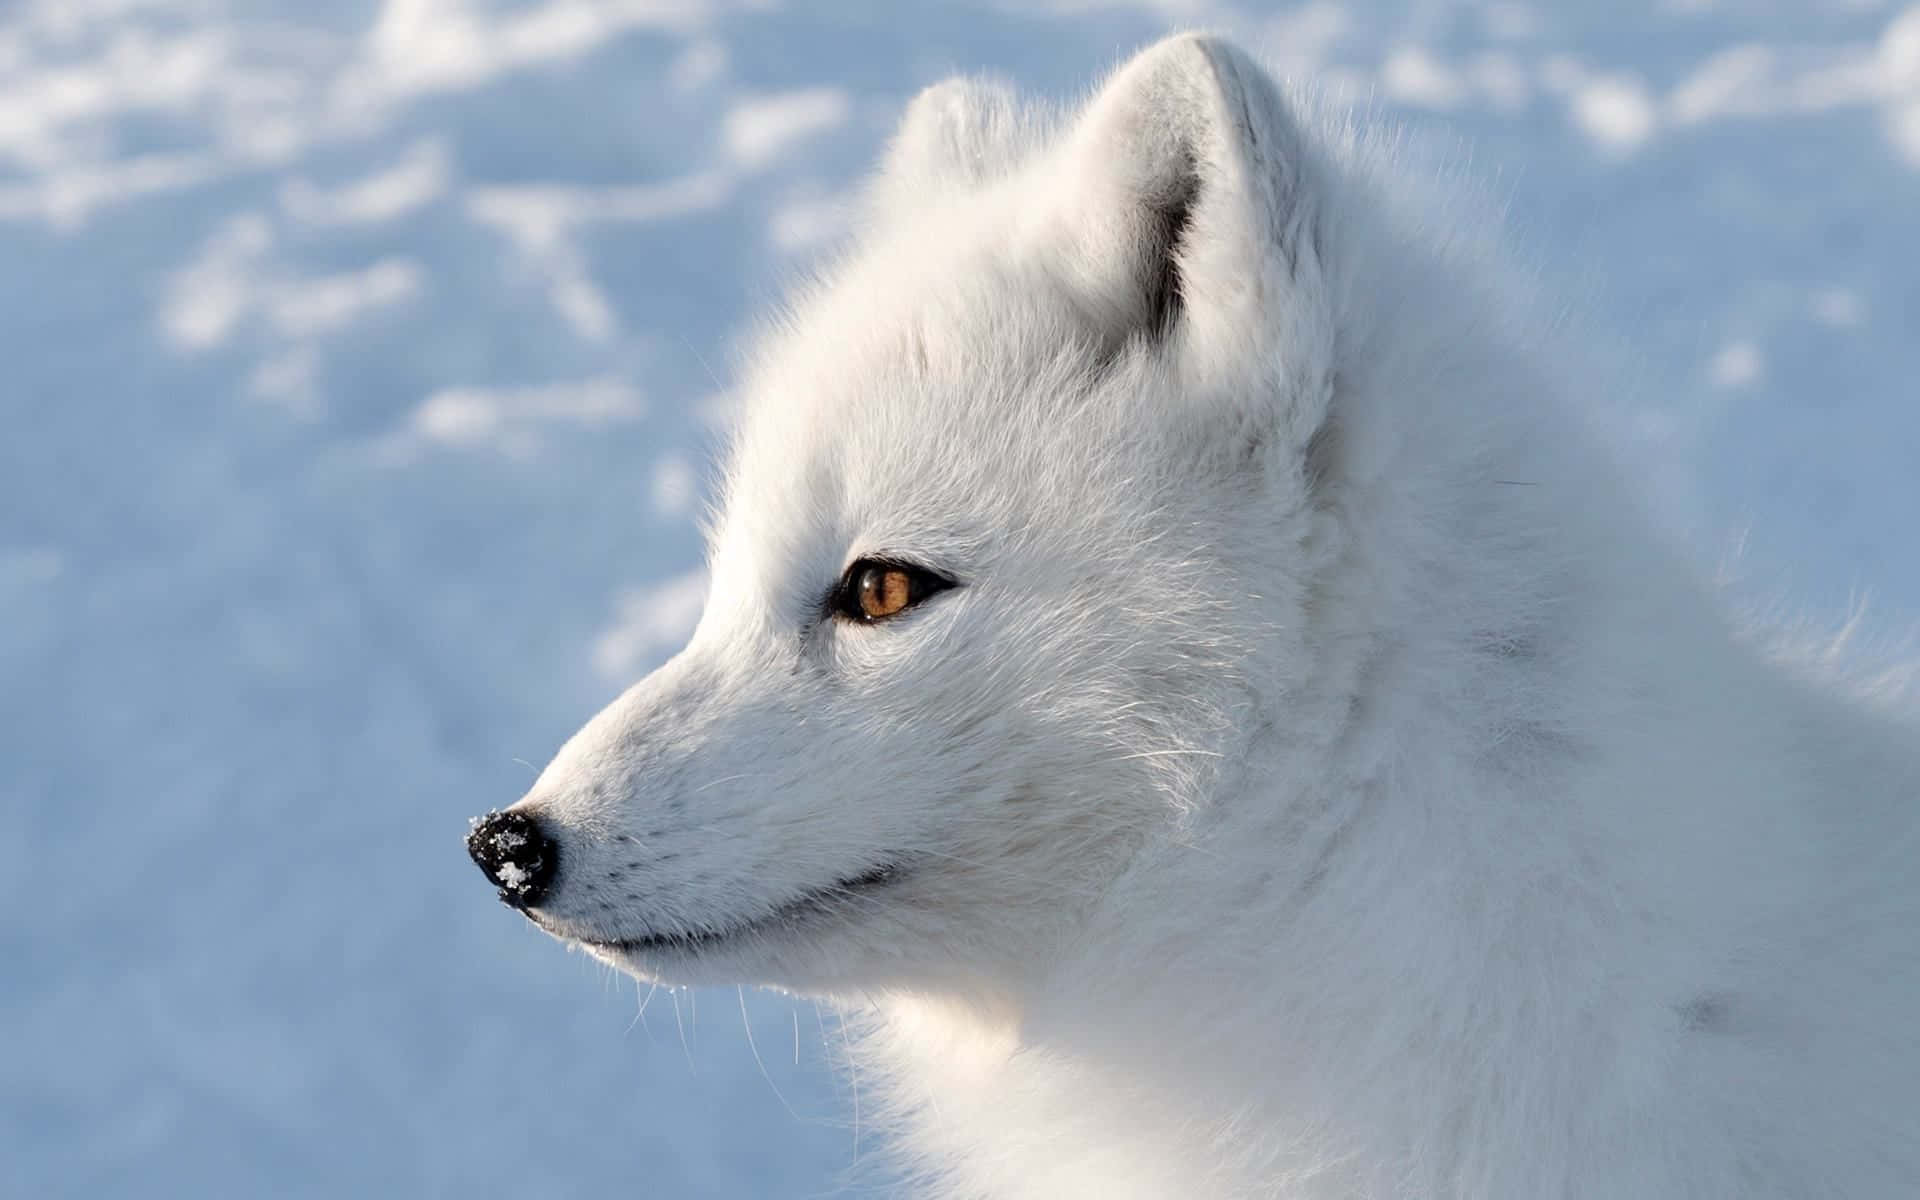 "Close up of an Arctic Fox in its natural habitat"